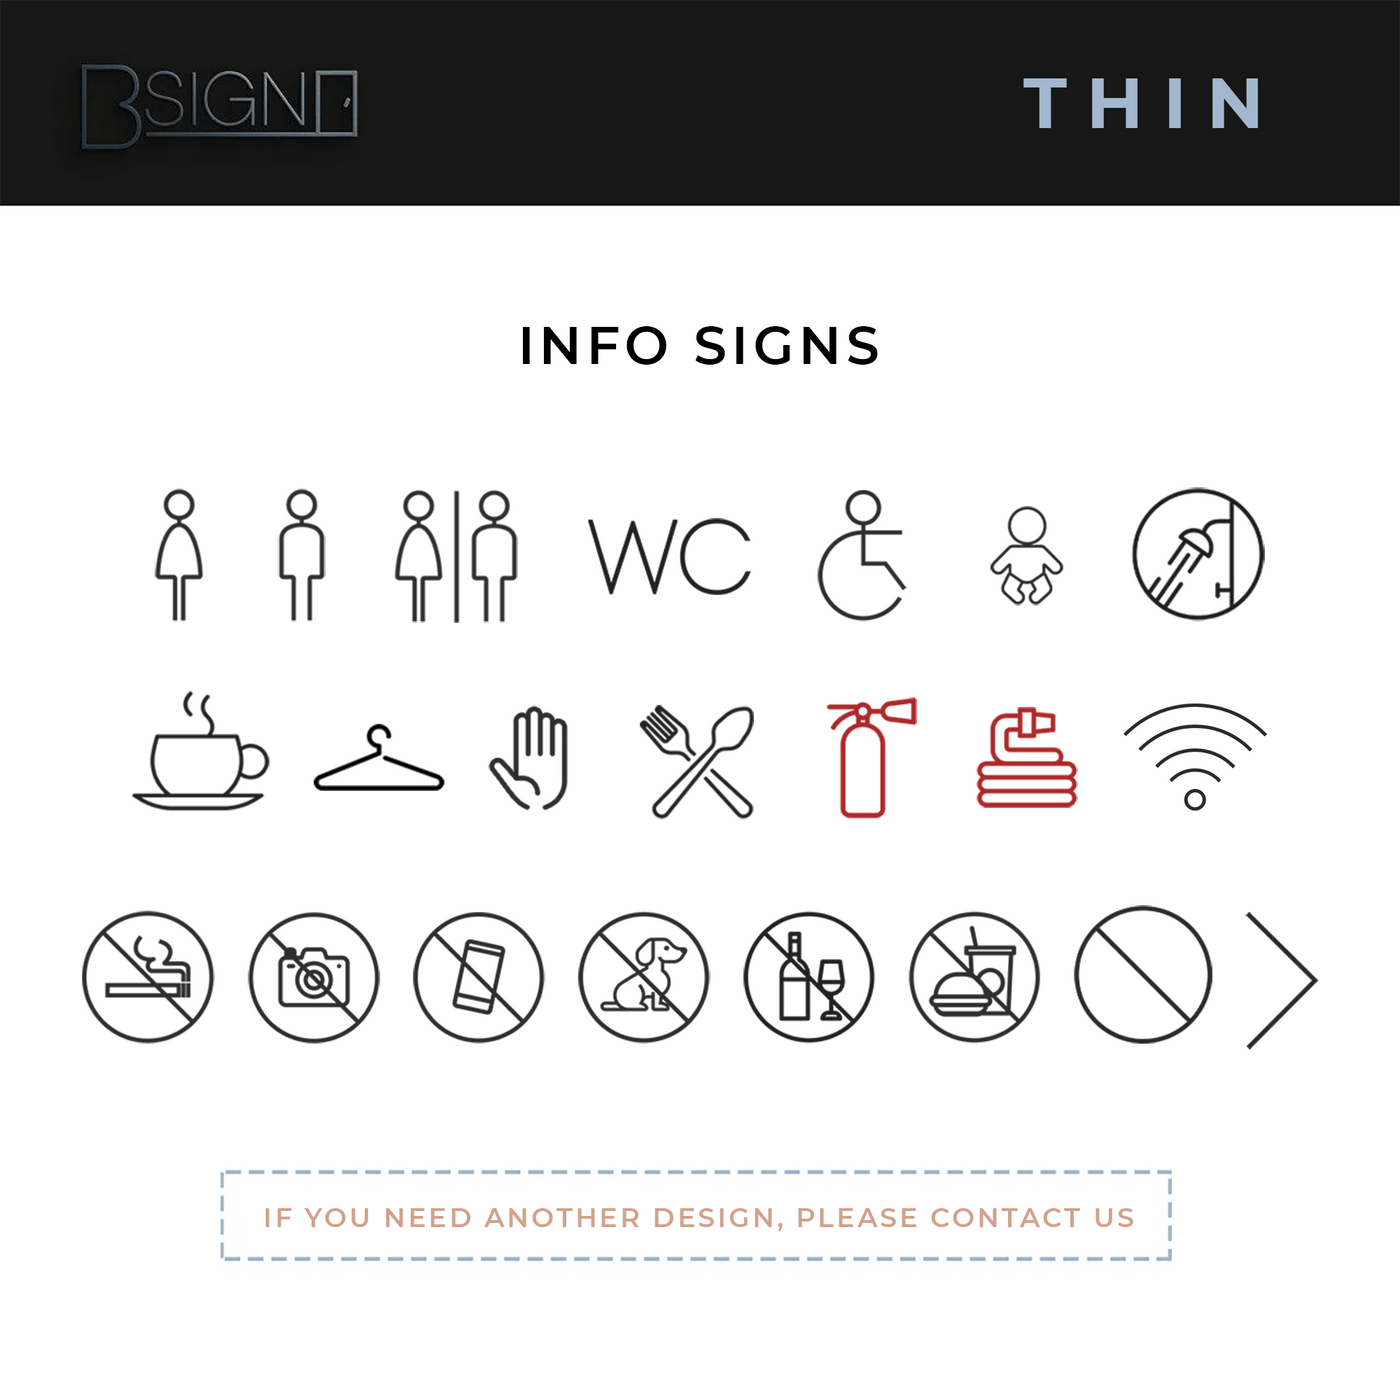 Men's Restroom Sign: Acrylic Sign — "Thin" Design